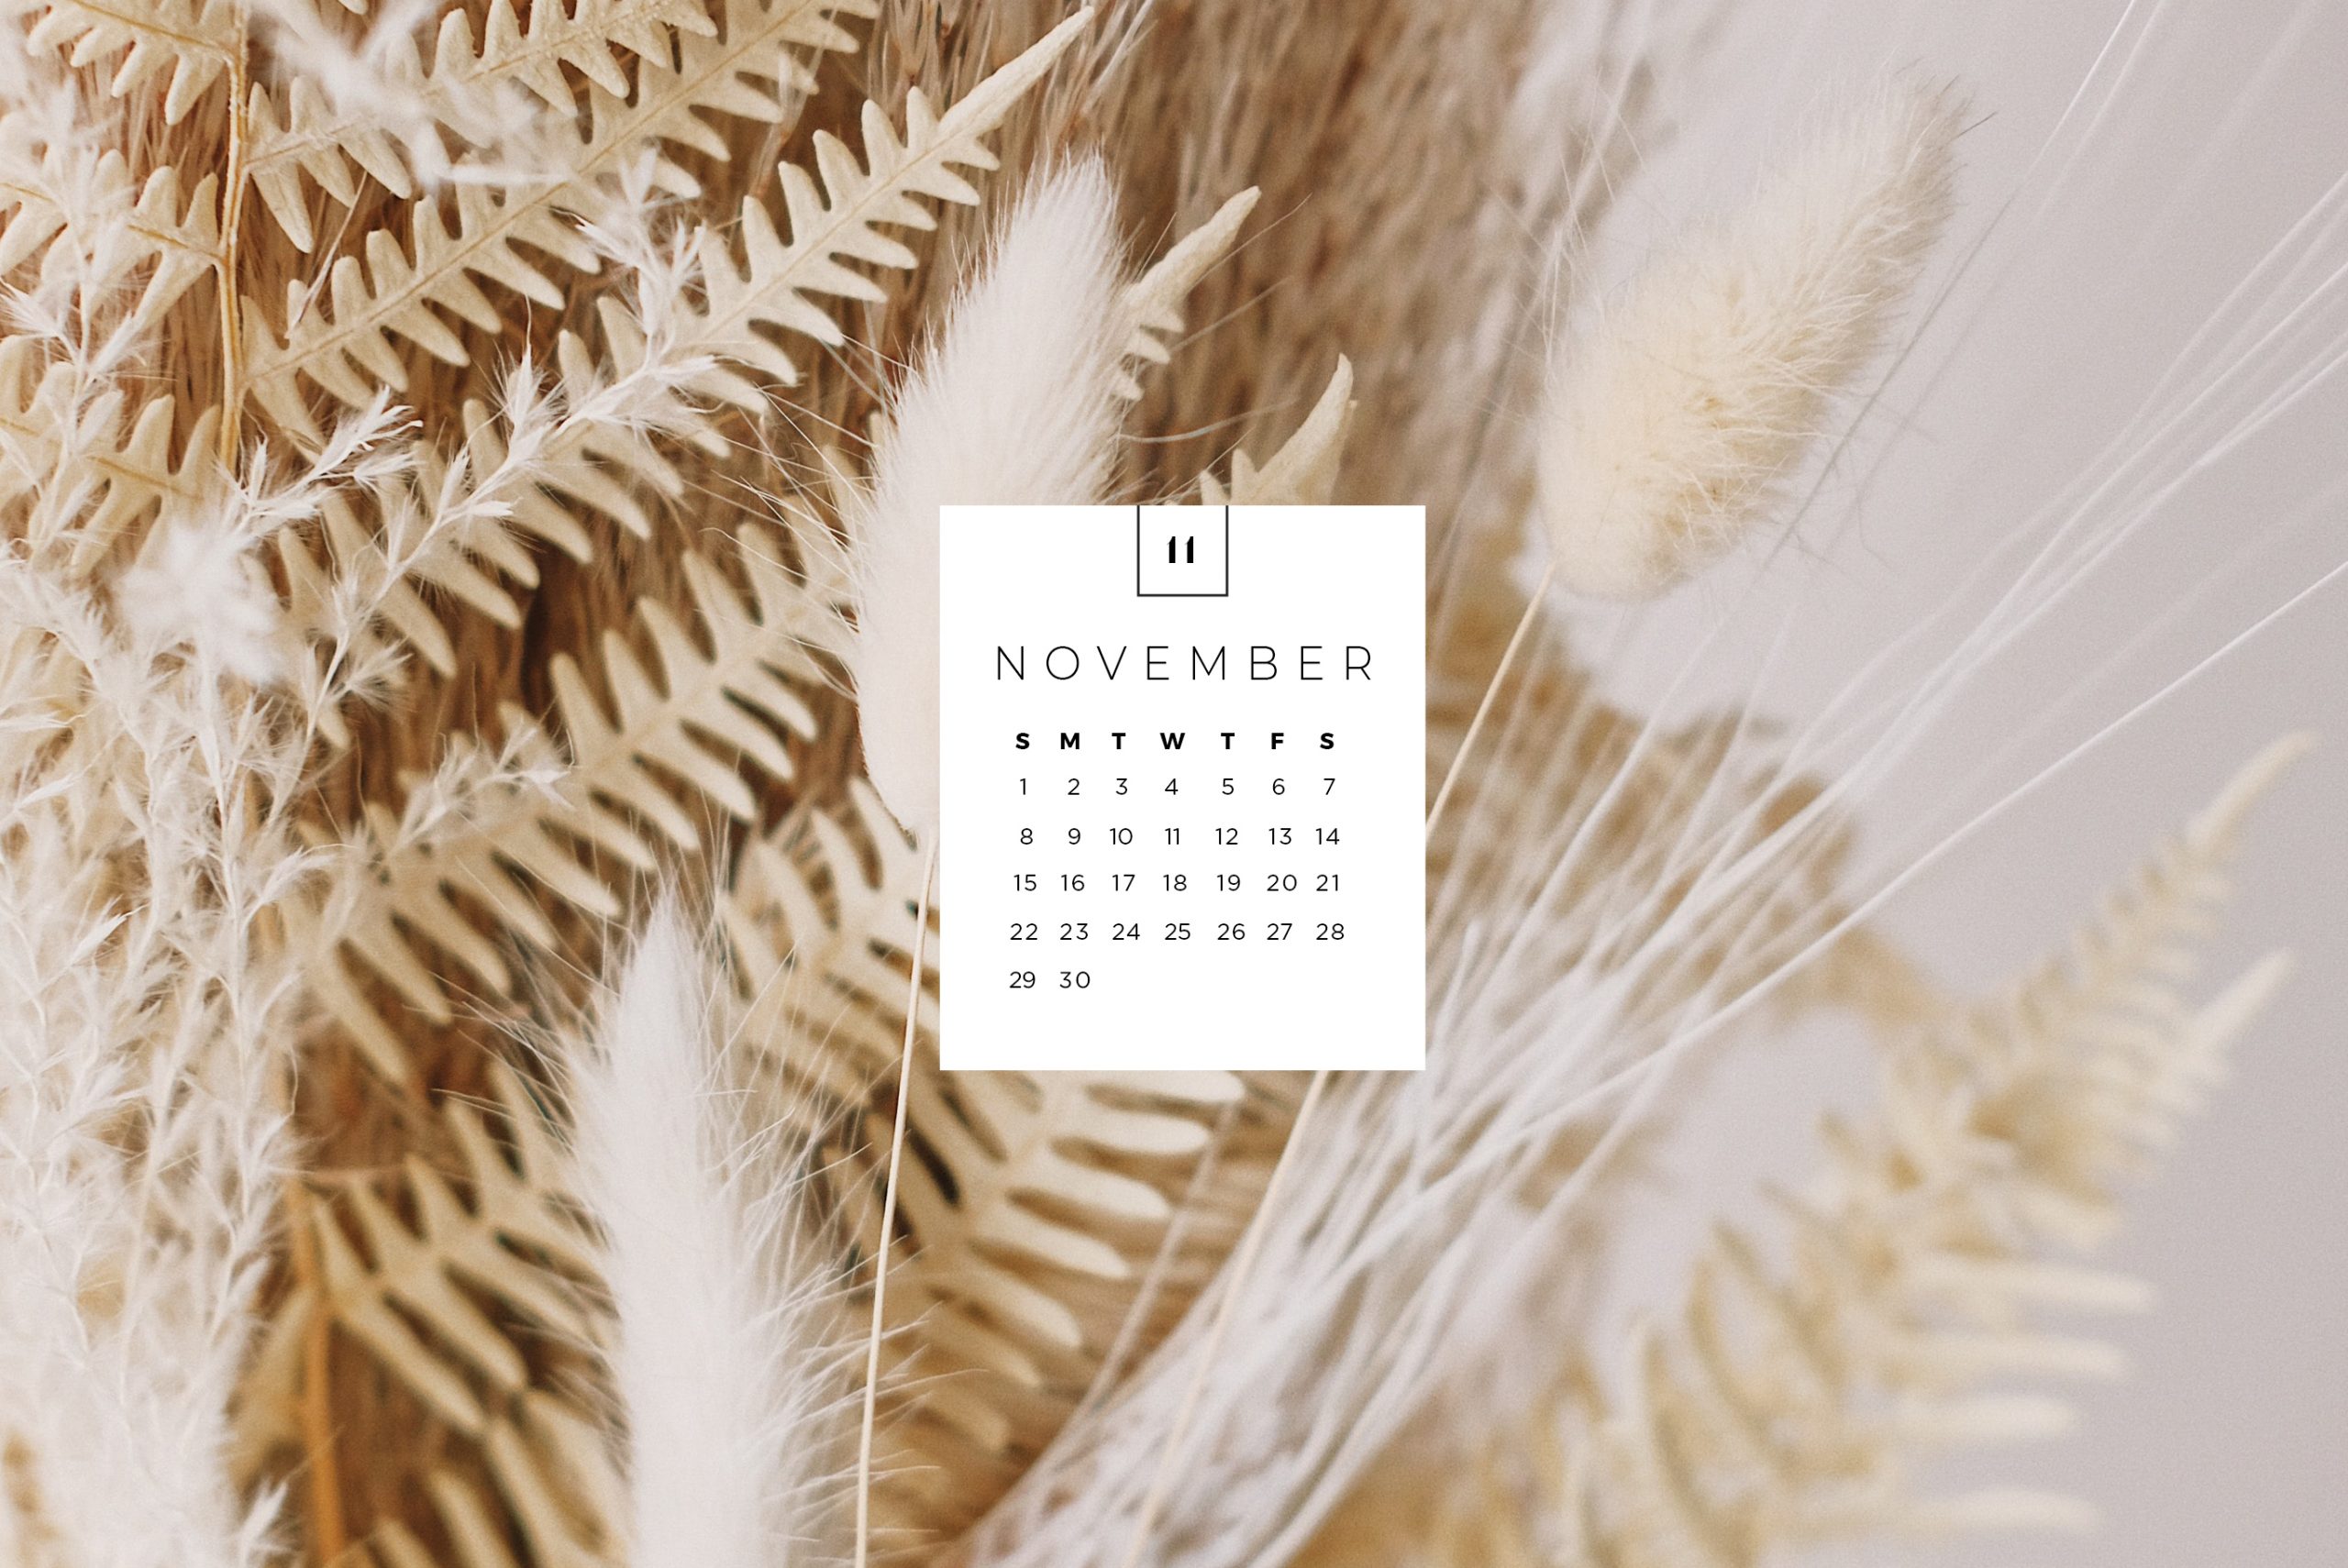 November calendar wallpaper desktop download